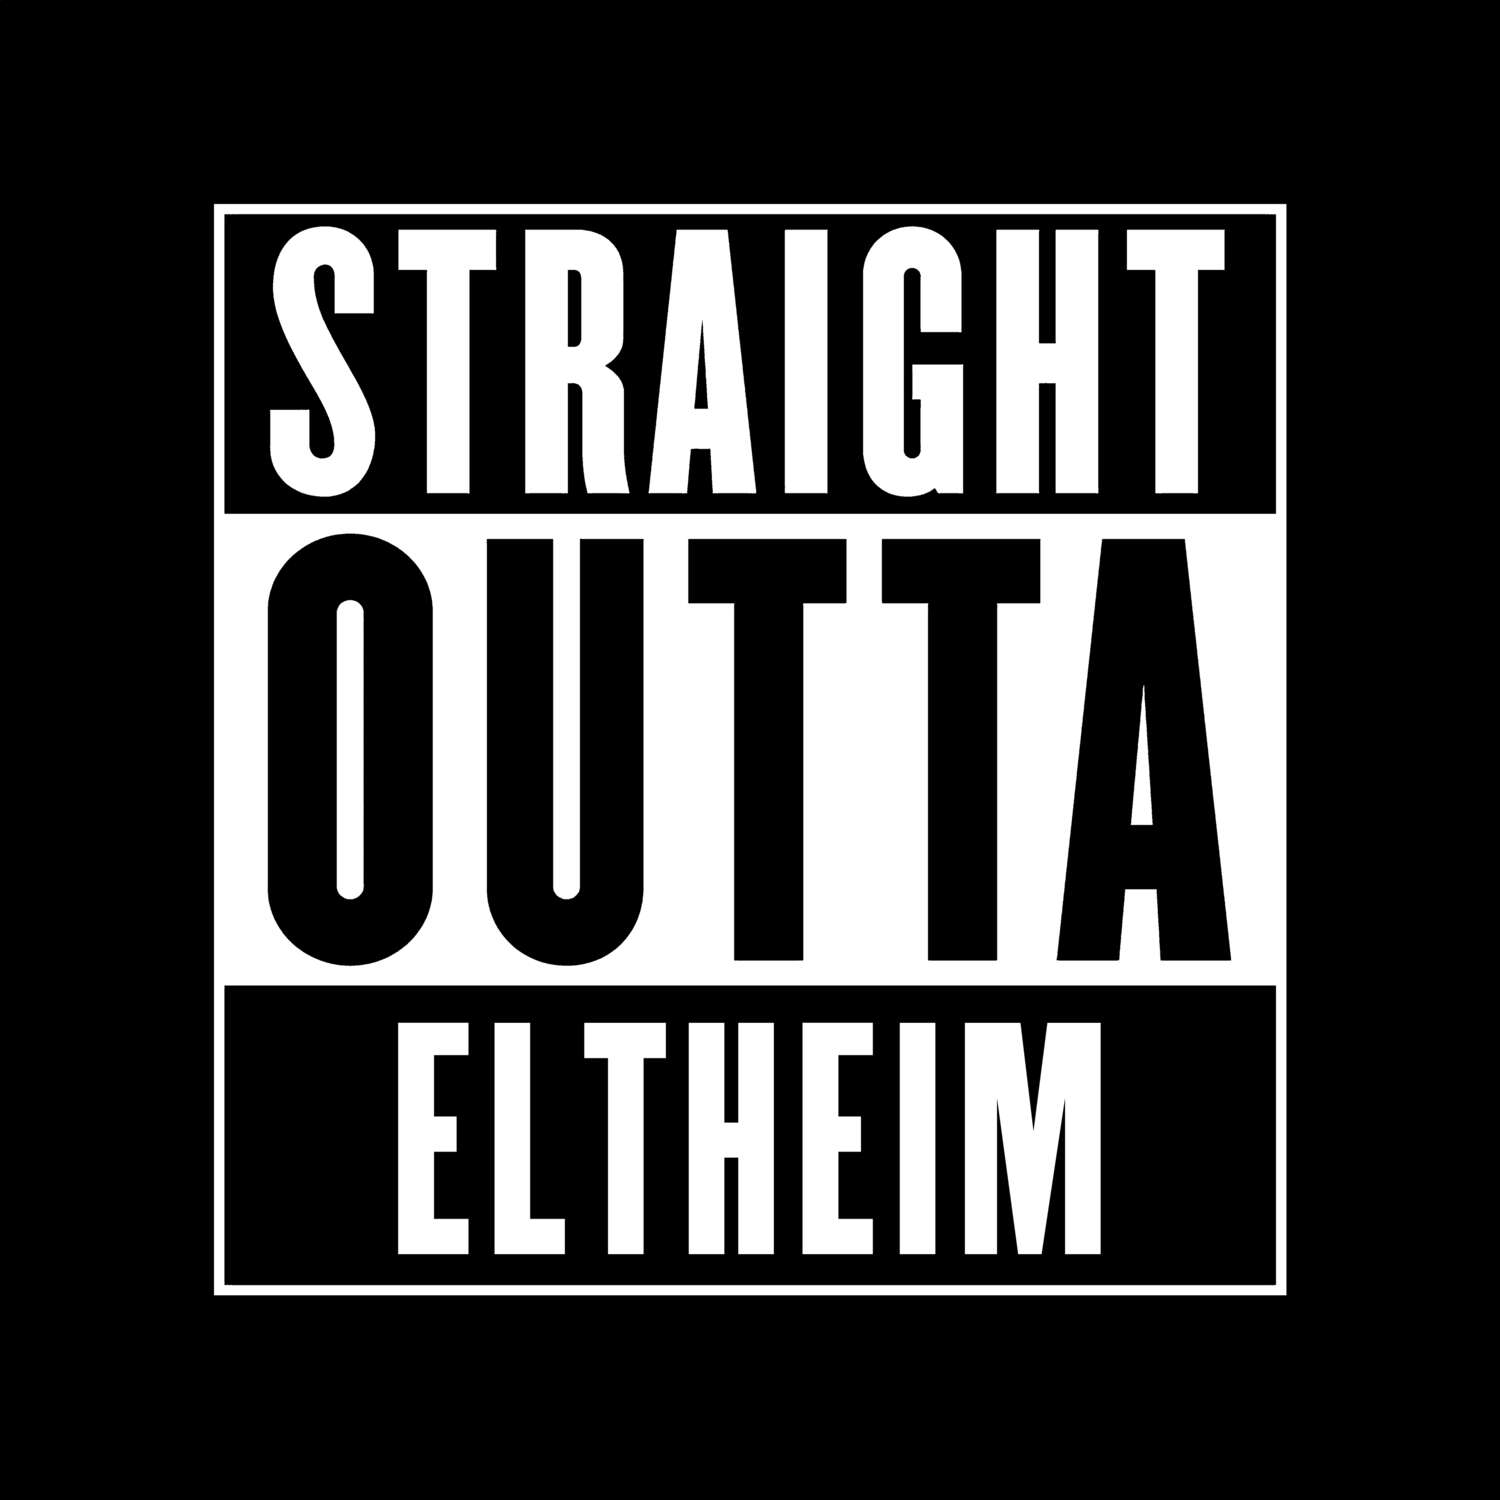 Eltheim T-Shirt »Straight Outta«